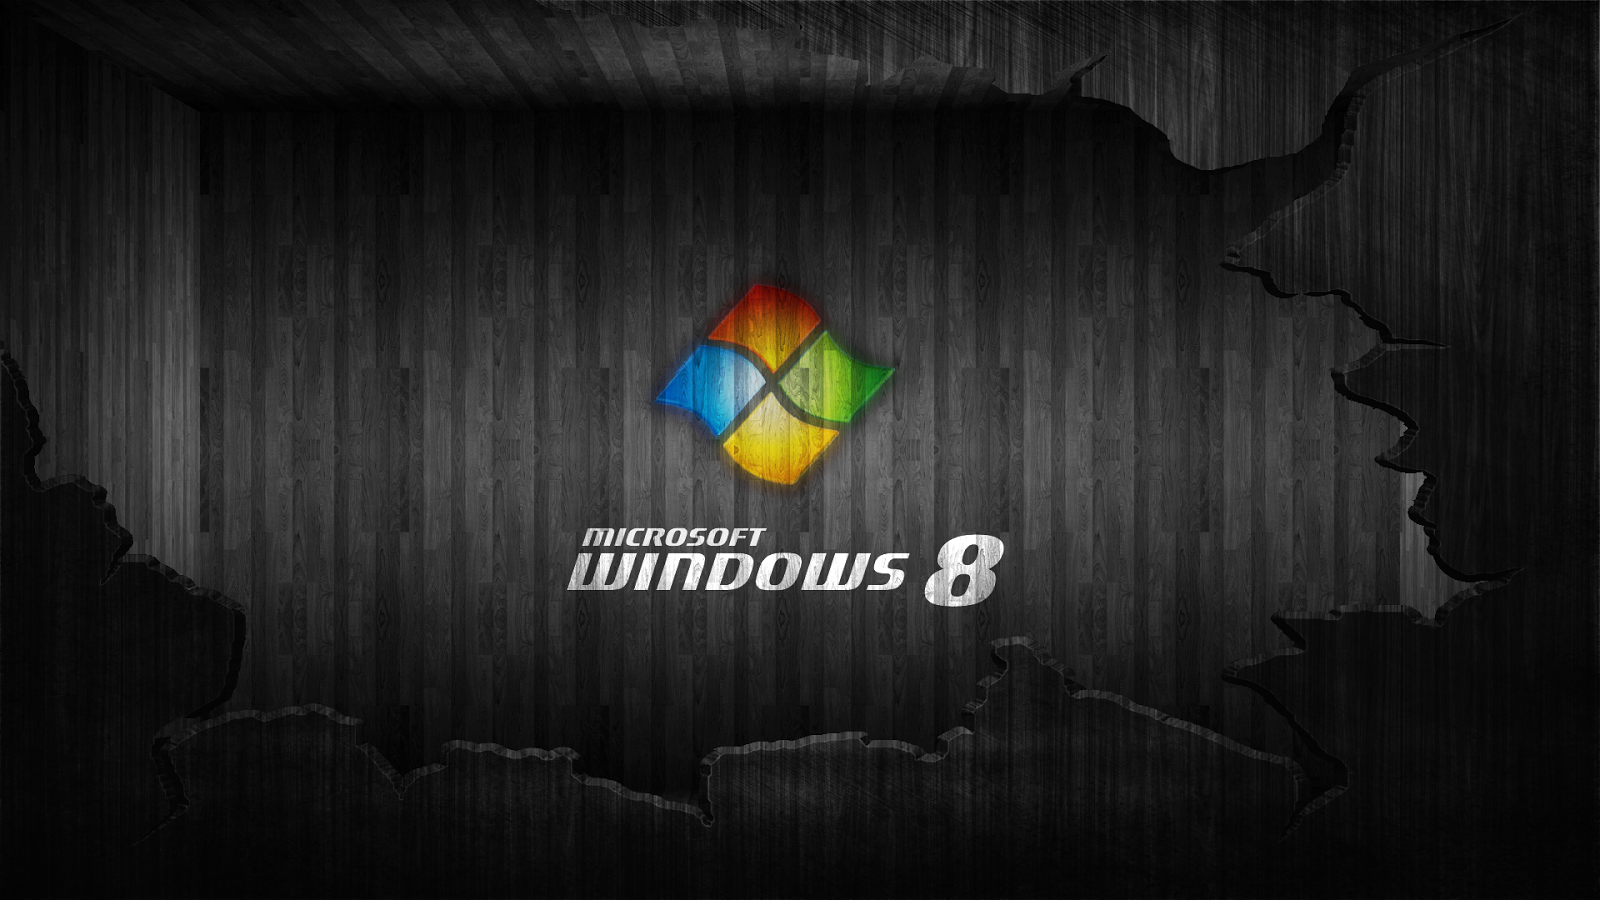 Windows 8 full screen pics,microsoft windows,wallpapers of windows